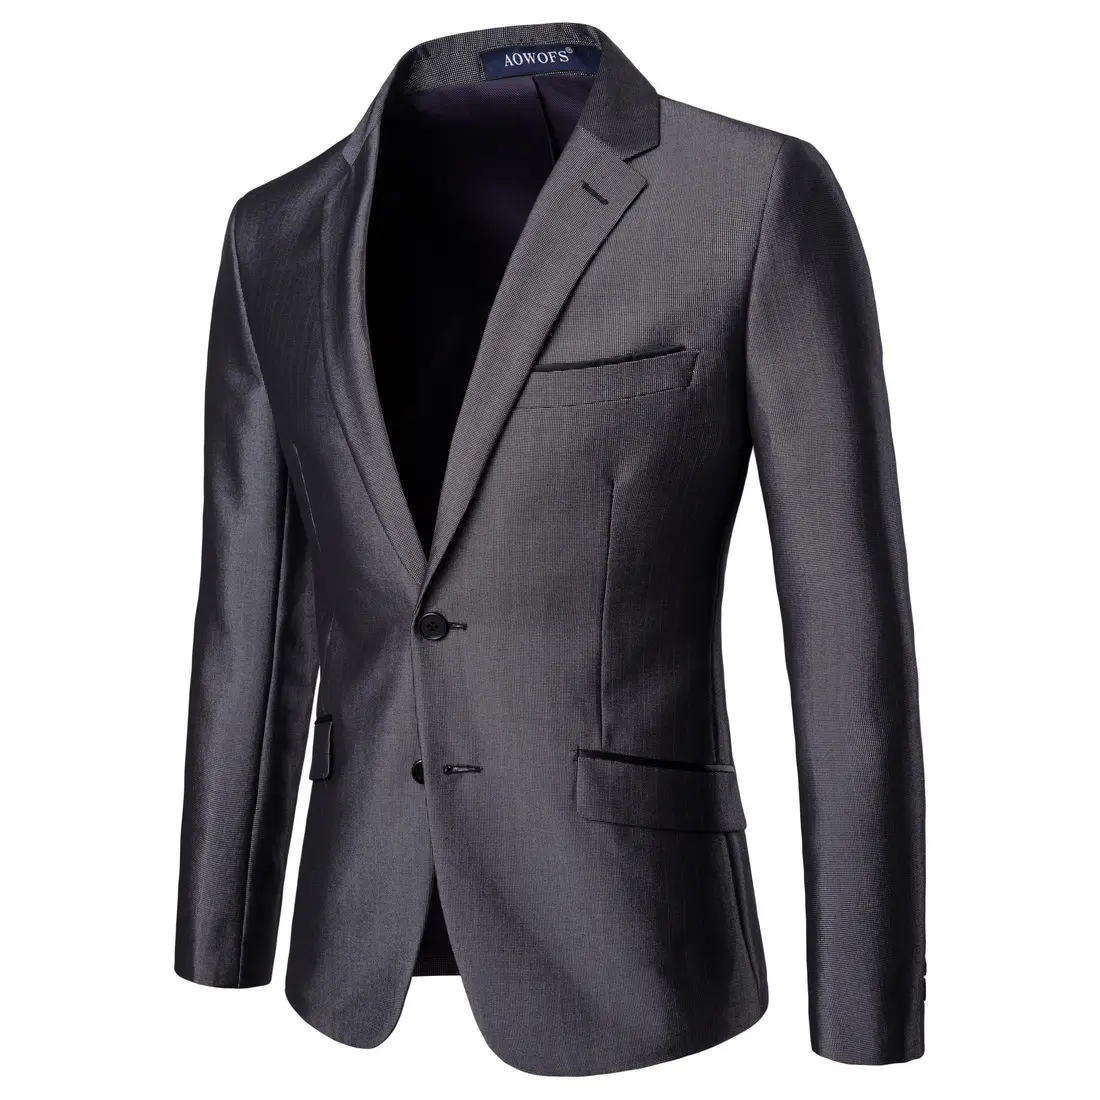 Professional Manufacture business suit tailor made classic wedding men's suits tuxedo suits